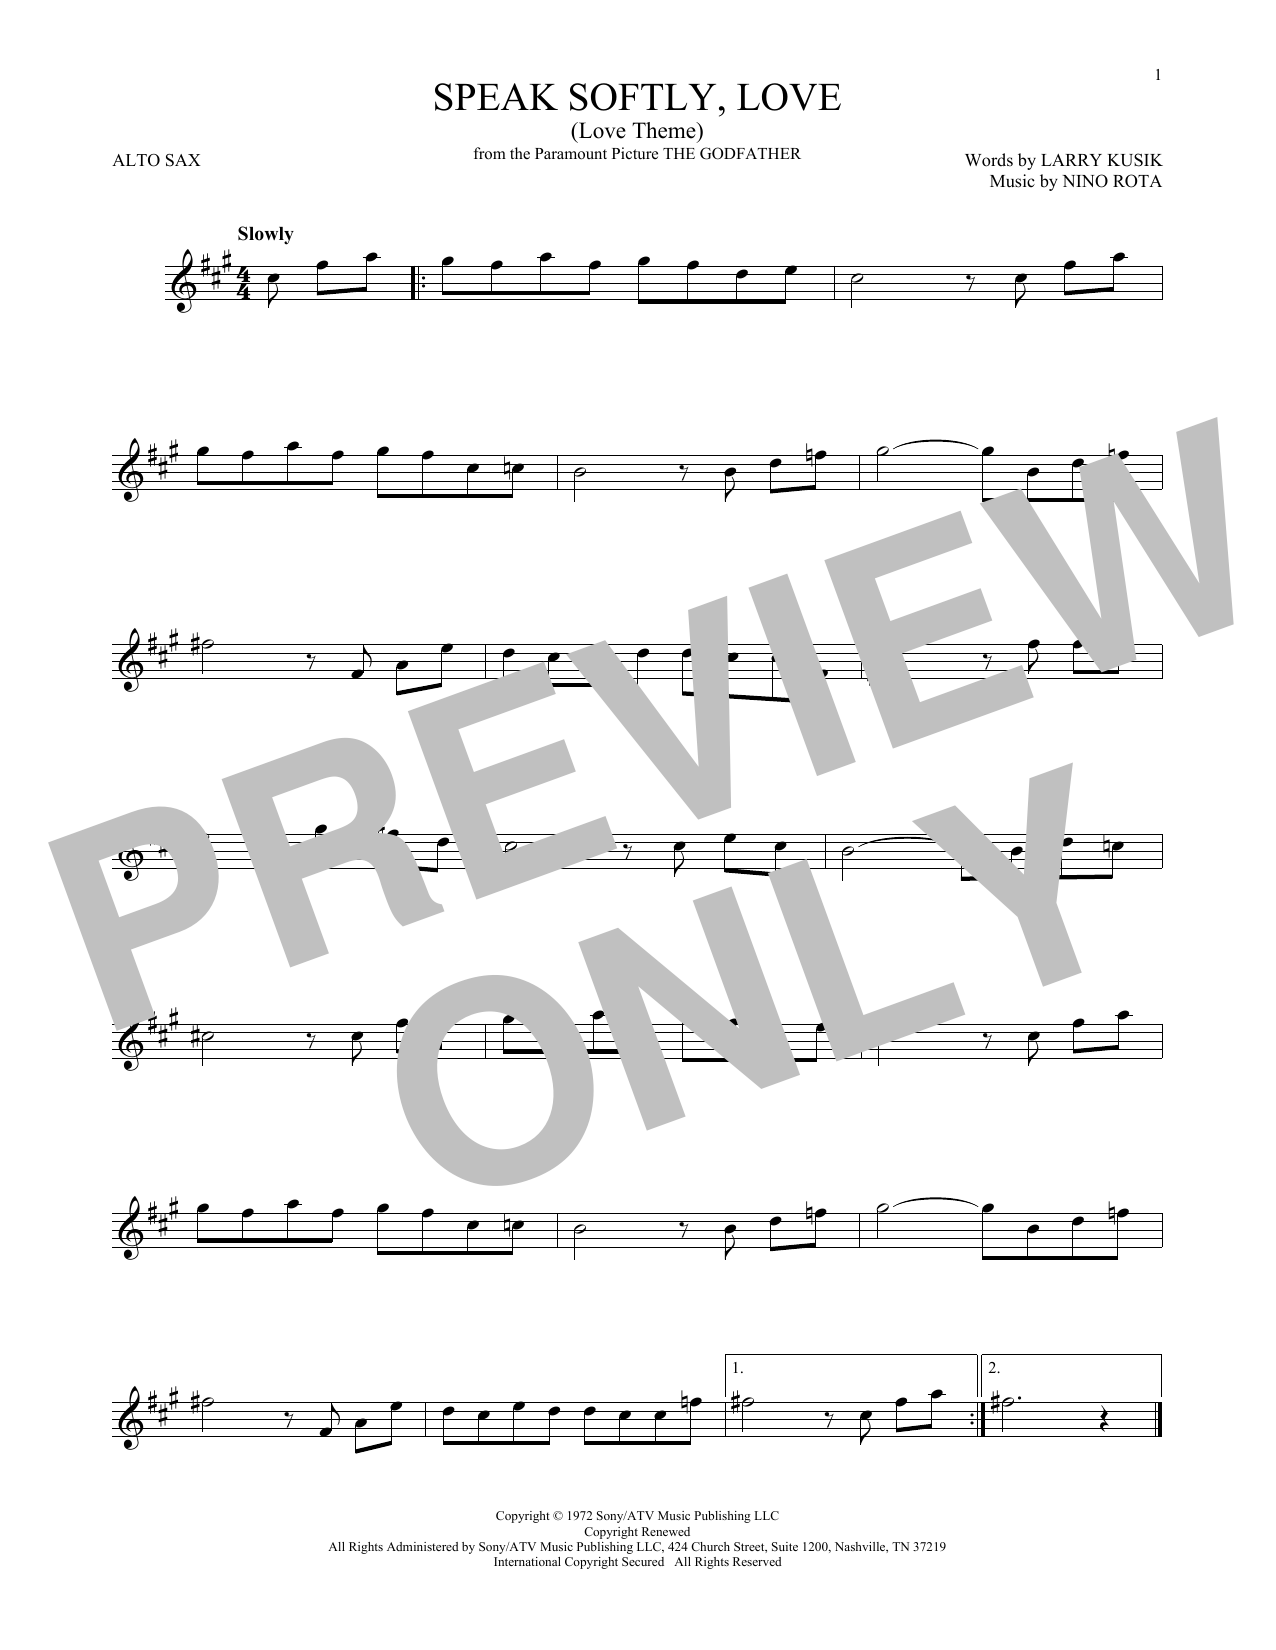 Larry Kusik Speak Softly, Love (Love Theme) Sheet Music Notes & Chords for Alto Saxophone - Download or Print PDF